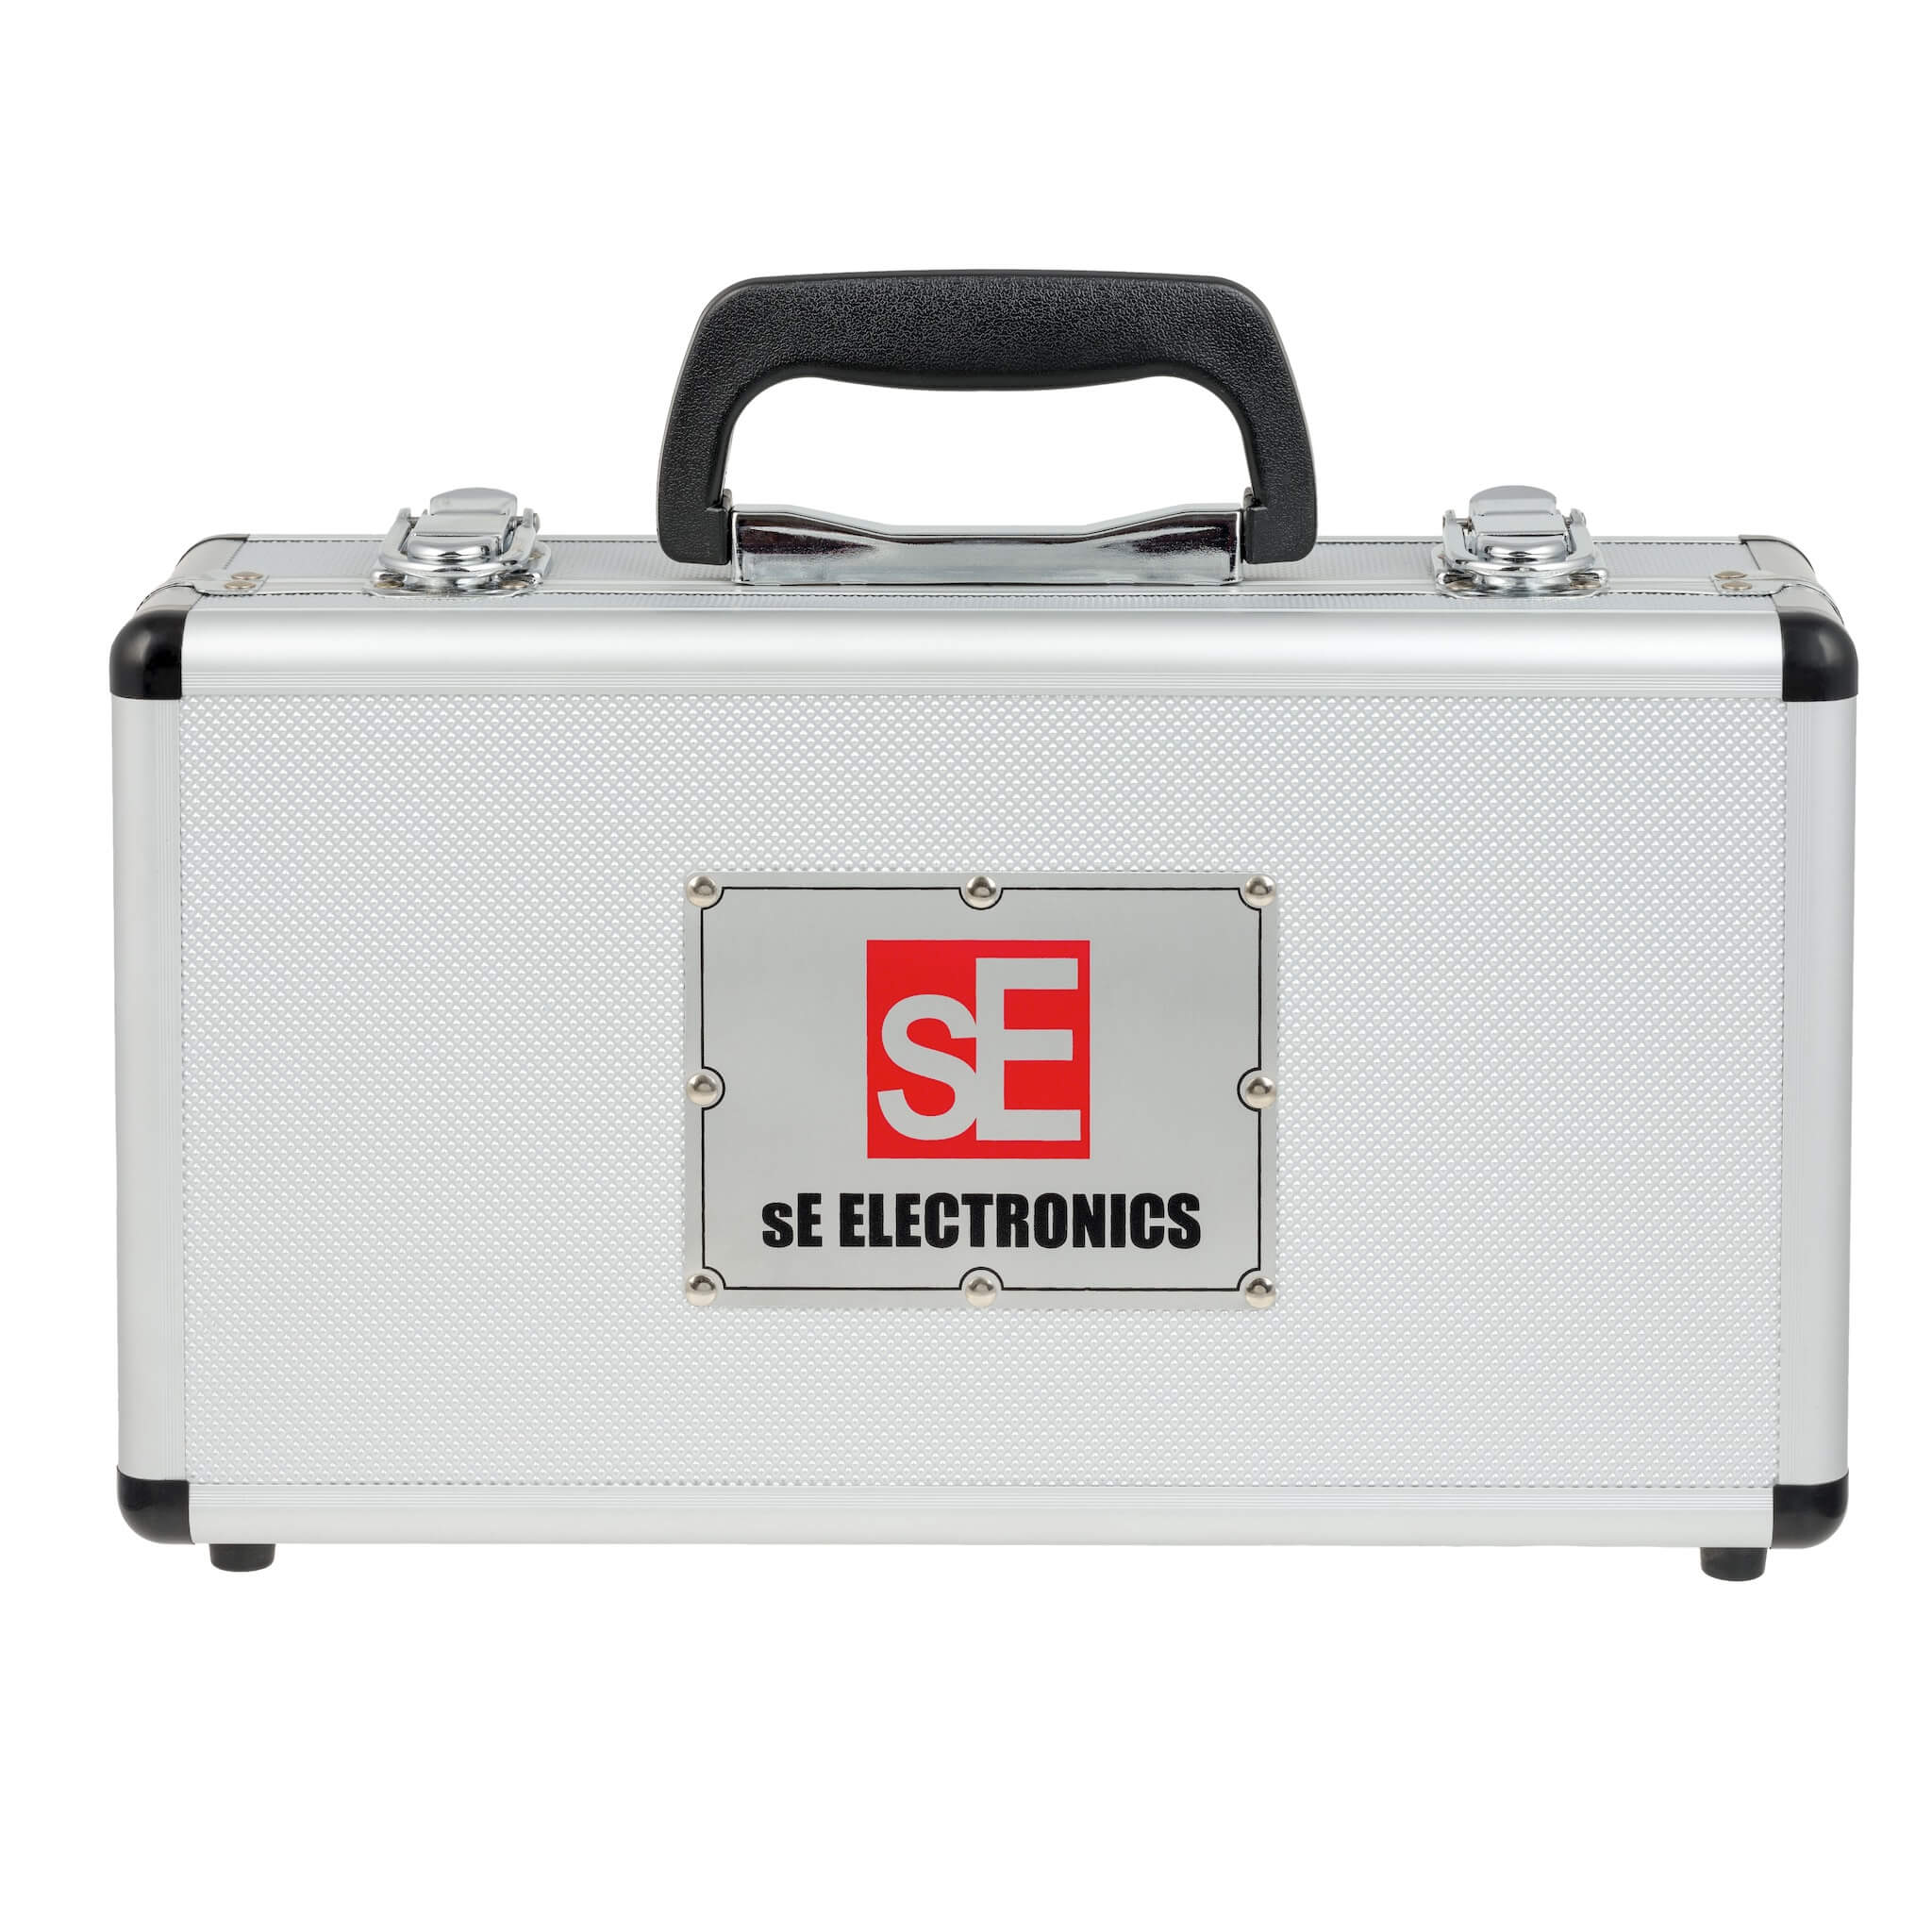 sE Electronics sE8 - Small Diaphragm Cardioid Condenser Microphone, case